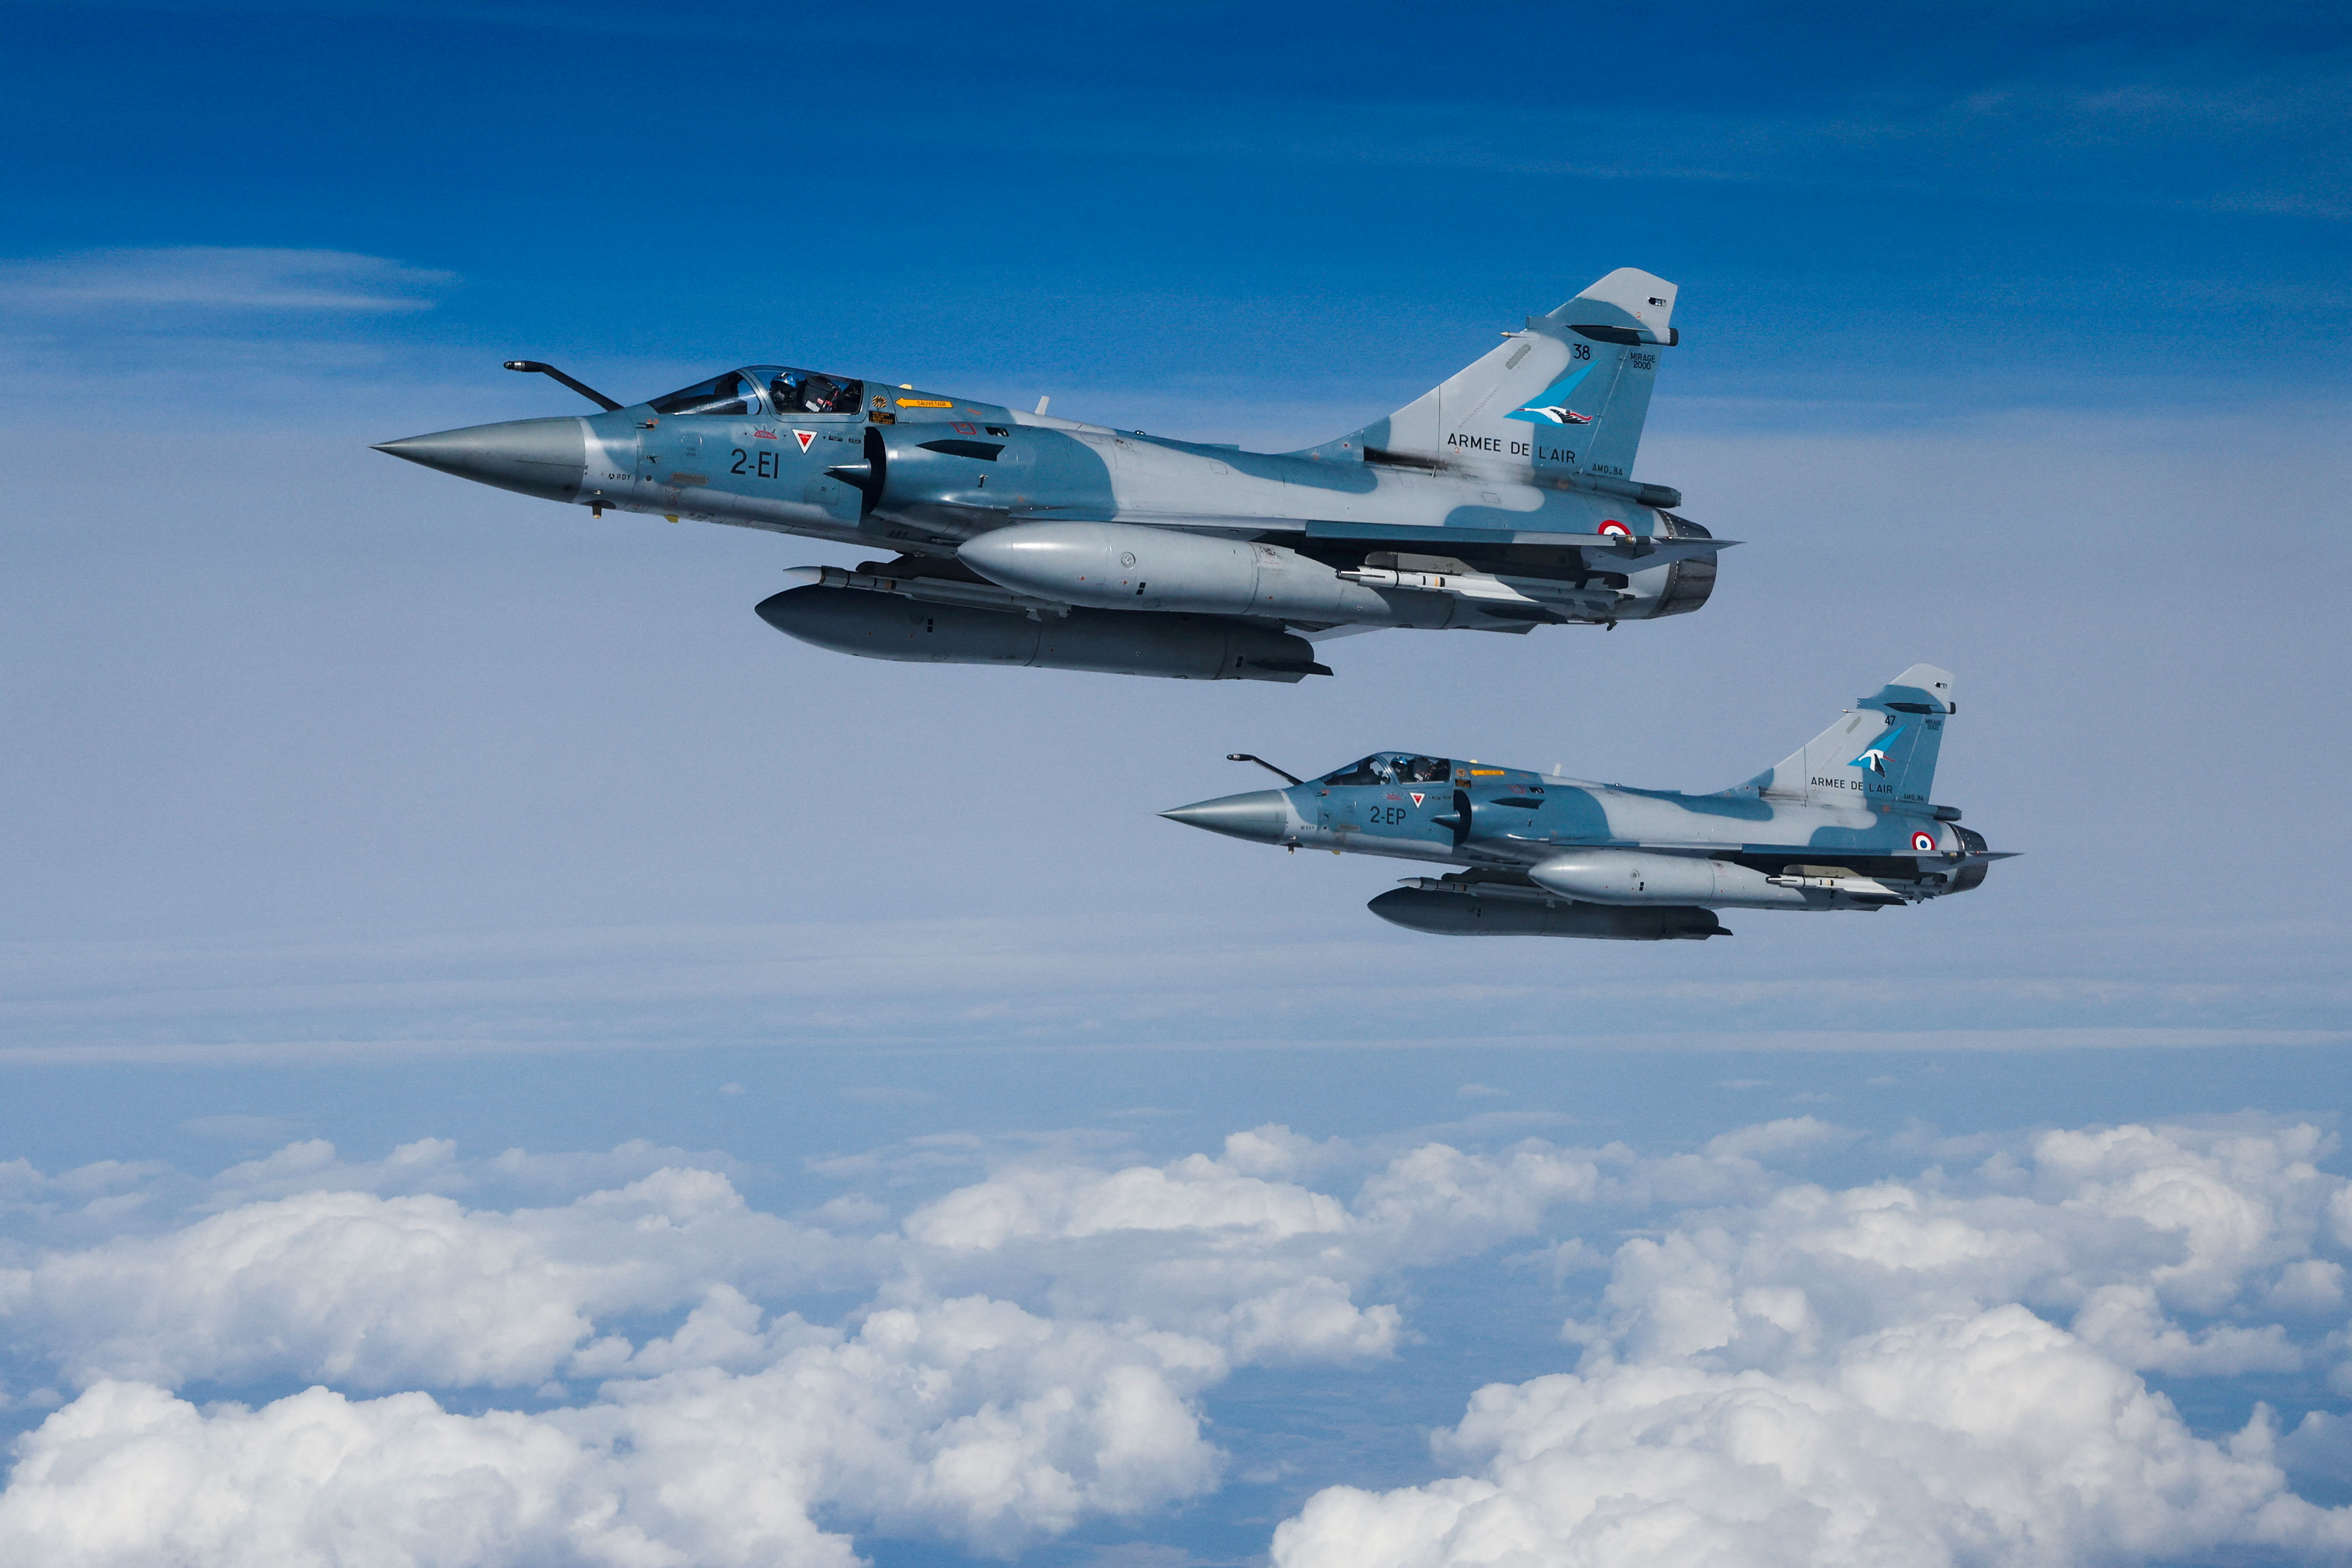 image France to provide Mirage 2000 warplanes to Ukraine, Macron says